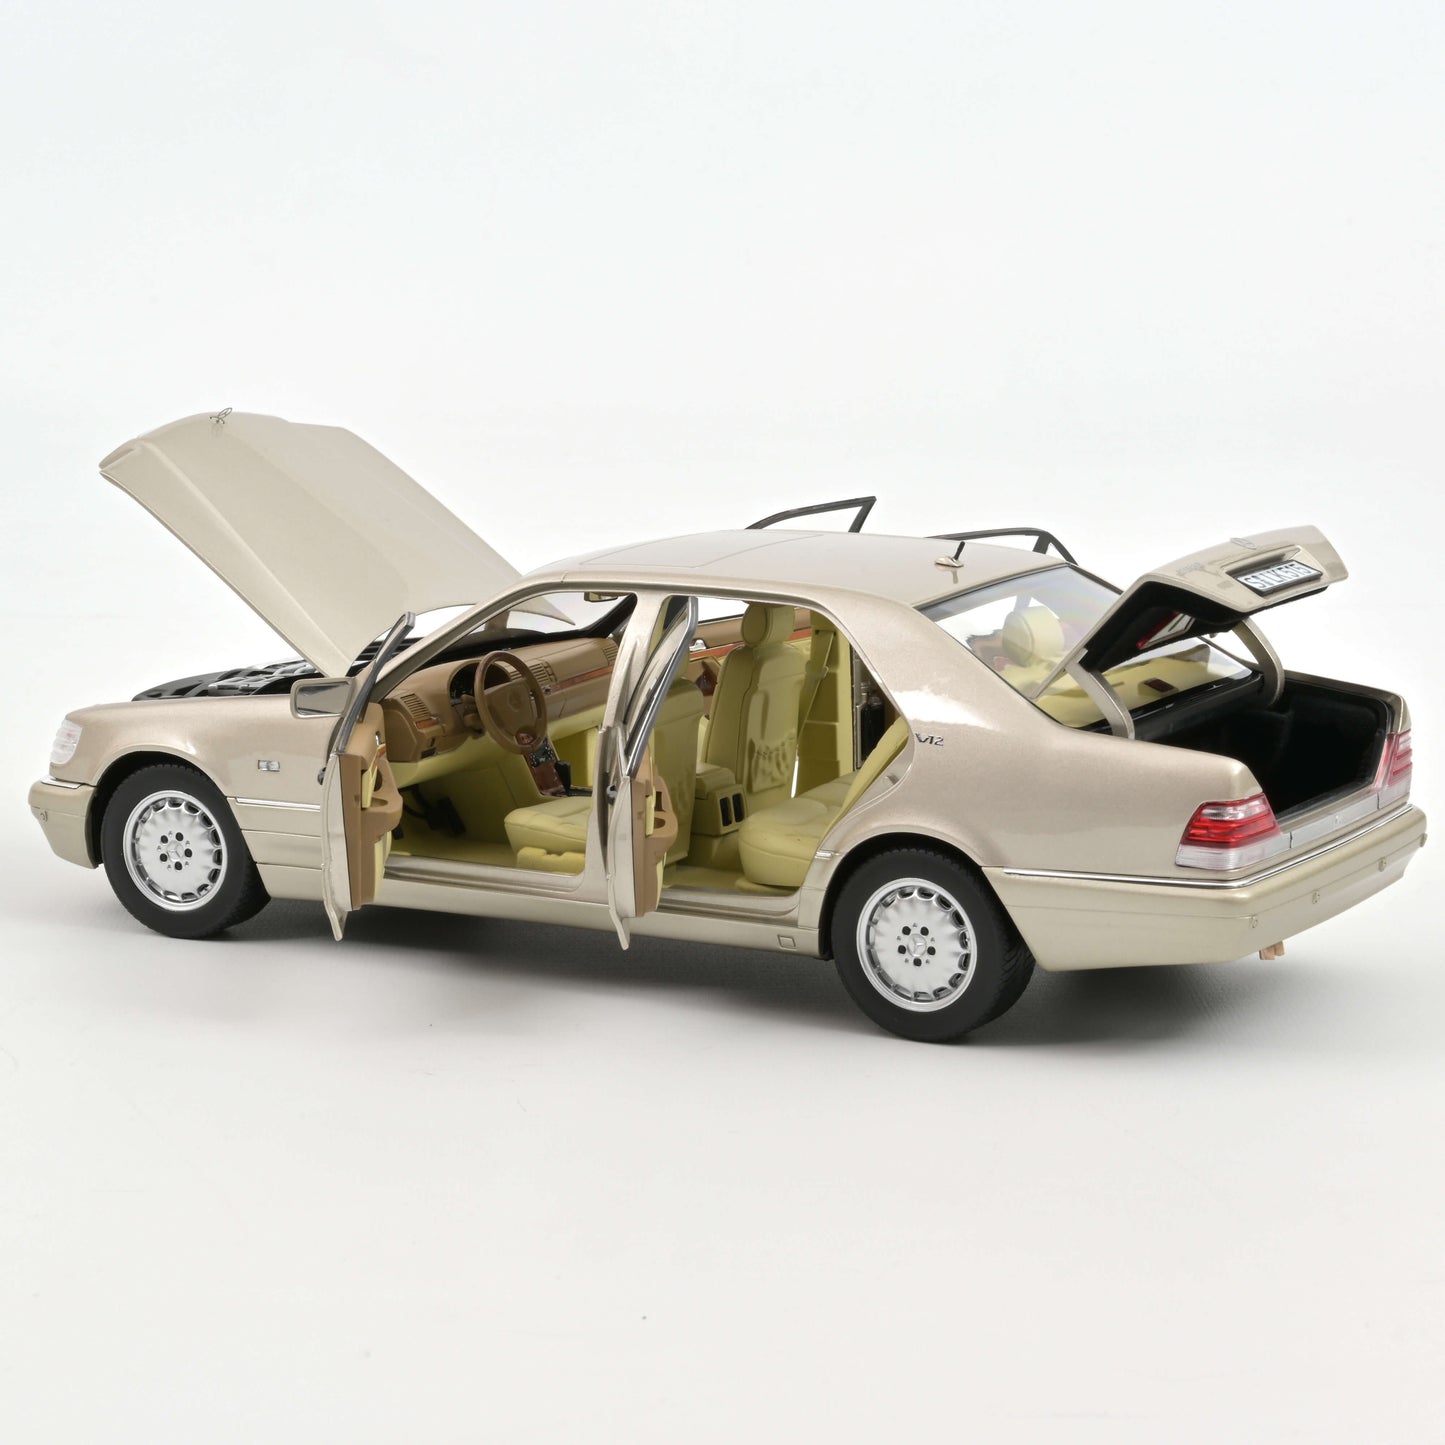 1:18 Mercedes-Benz S600 W140, 1997, sølvmetallic, Norev 183723, åben model